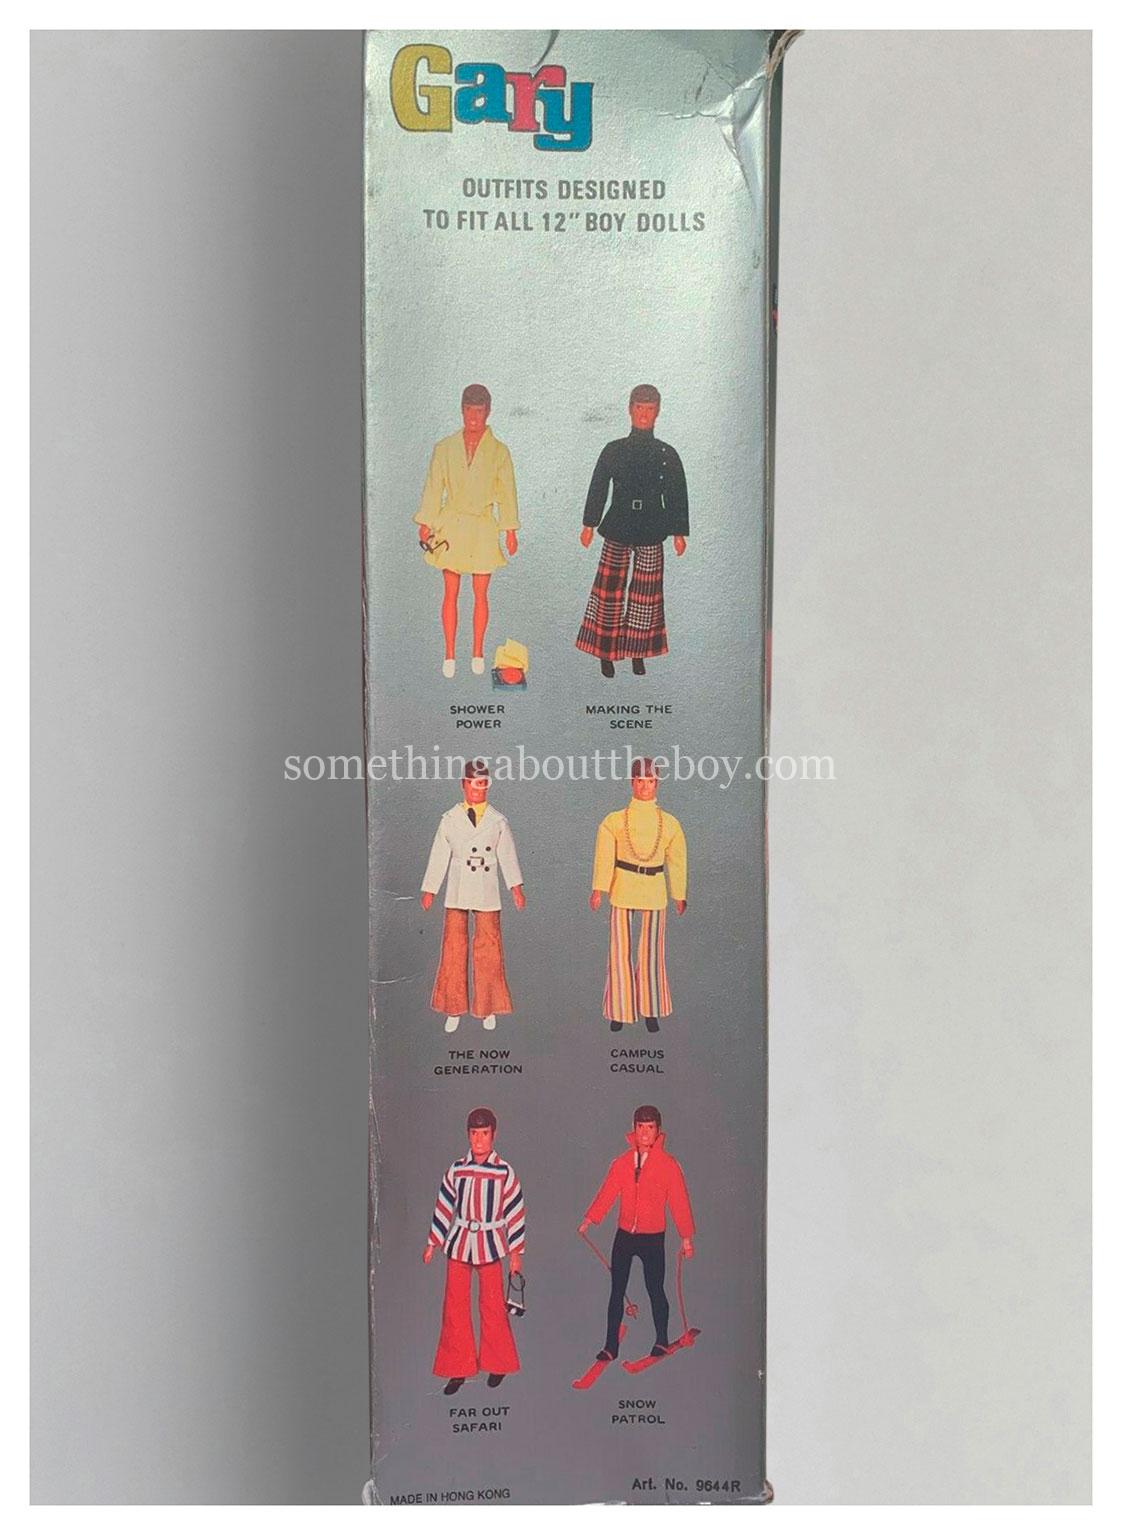 Gary doll (Canadian version) original packaging